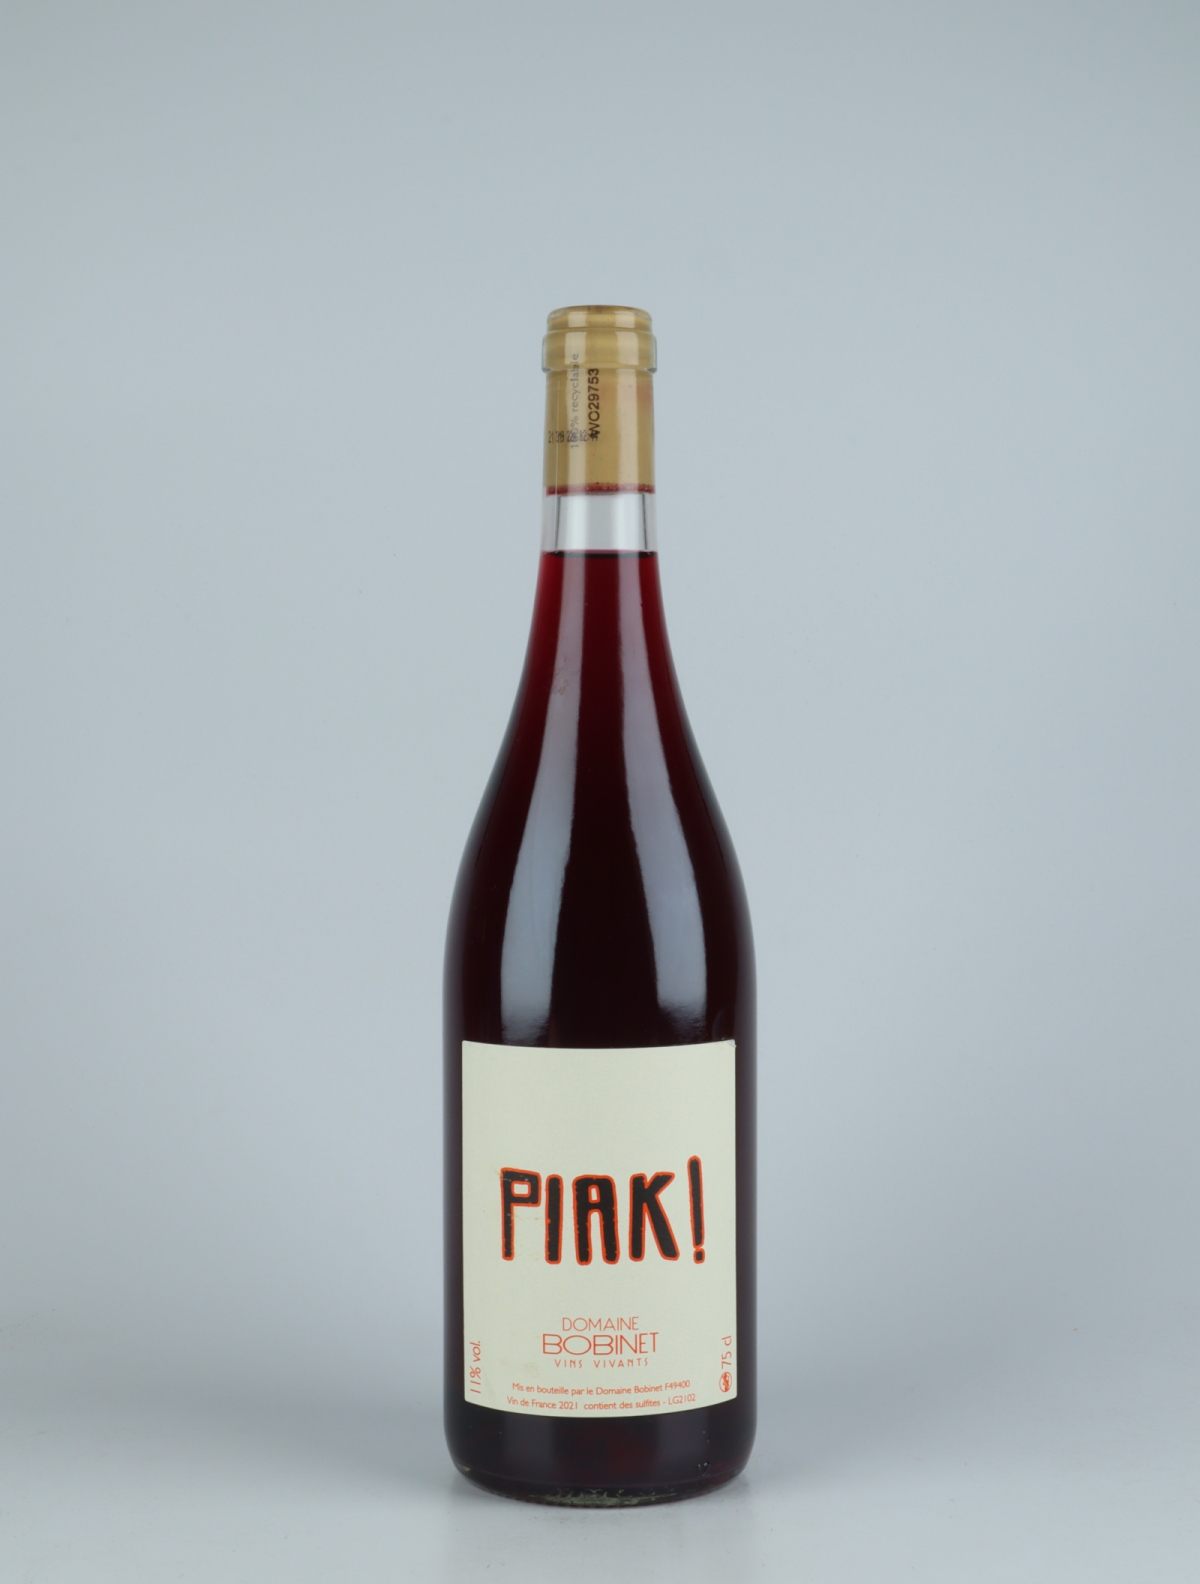 A bottle 2021 PIAK Rouge Red wine from Domaine Bobinet, Loire in France